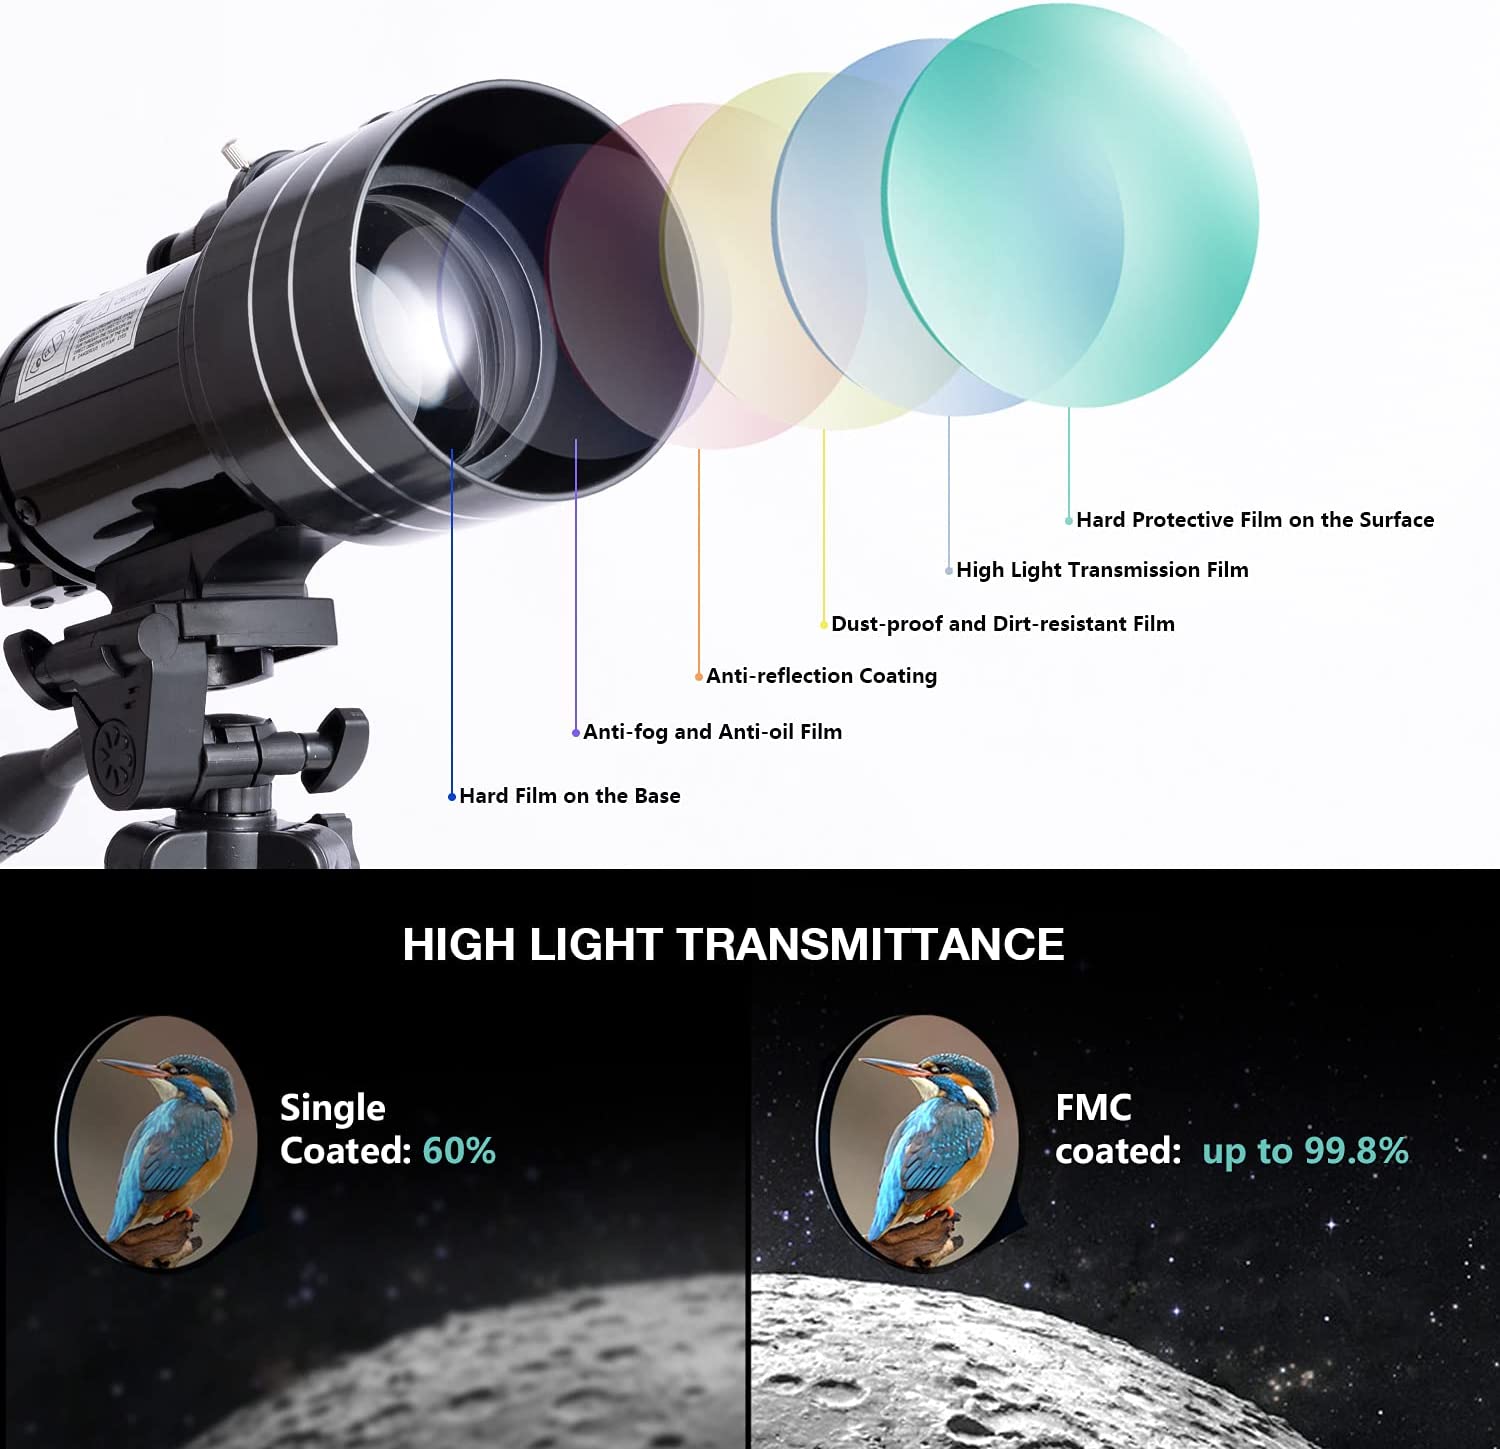 FreeSoldier 70mm Aperture Telescope, High Magnification, Superior Optics, Bonus Accessories, Day and Night Use